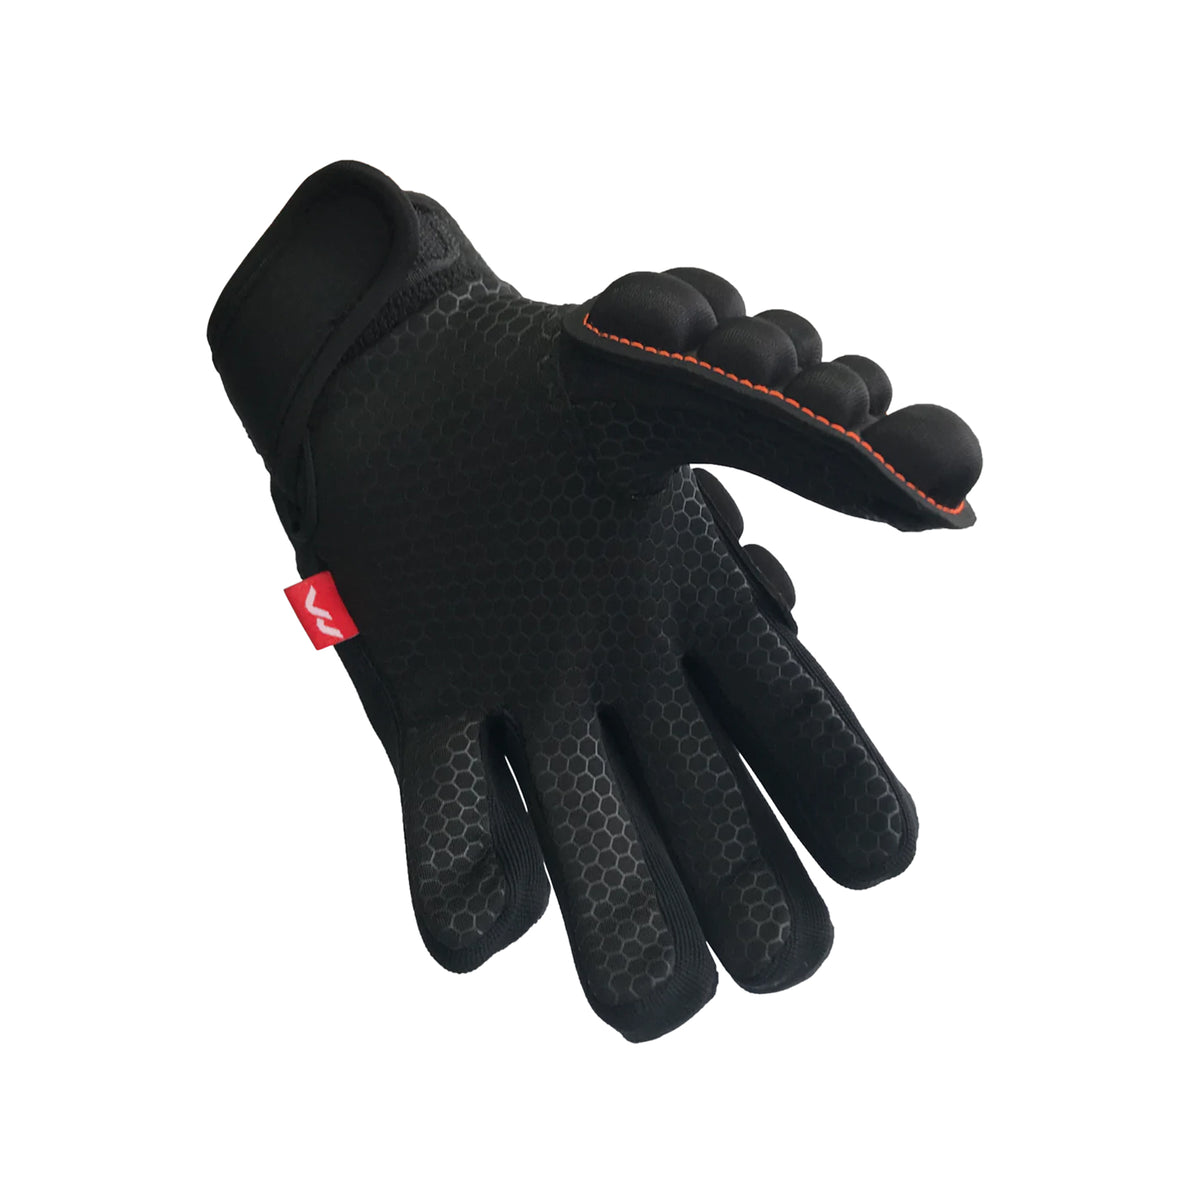 Mercian Evo 0.3 Hockey Glove - Left Hand: Black/Orange